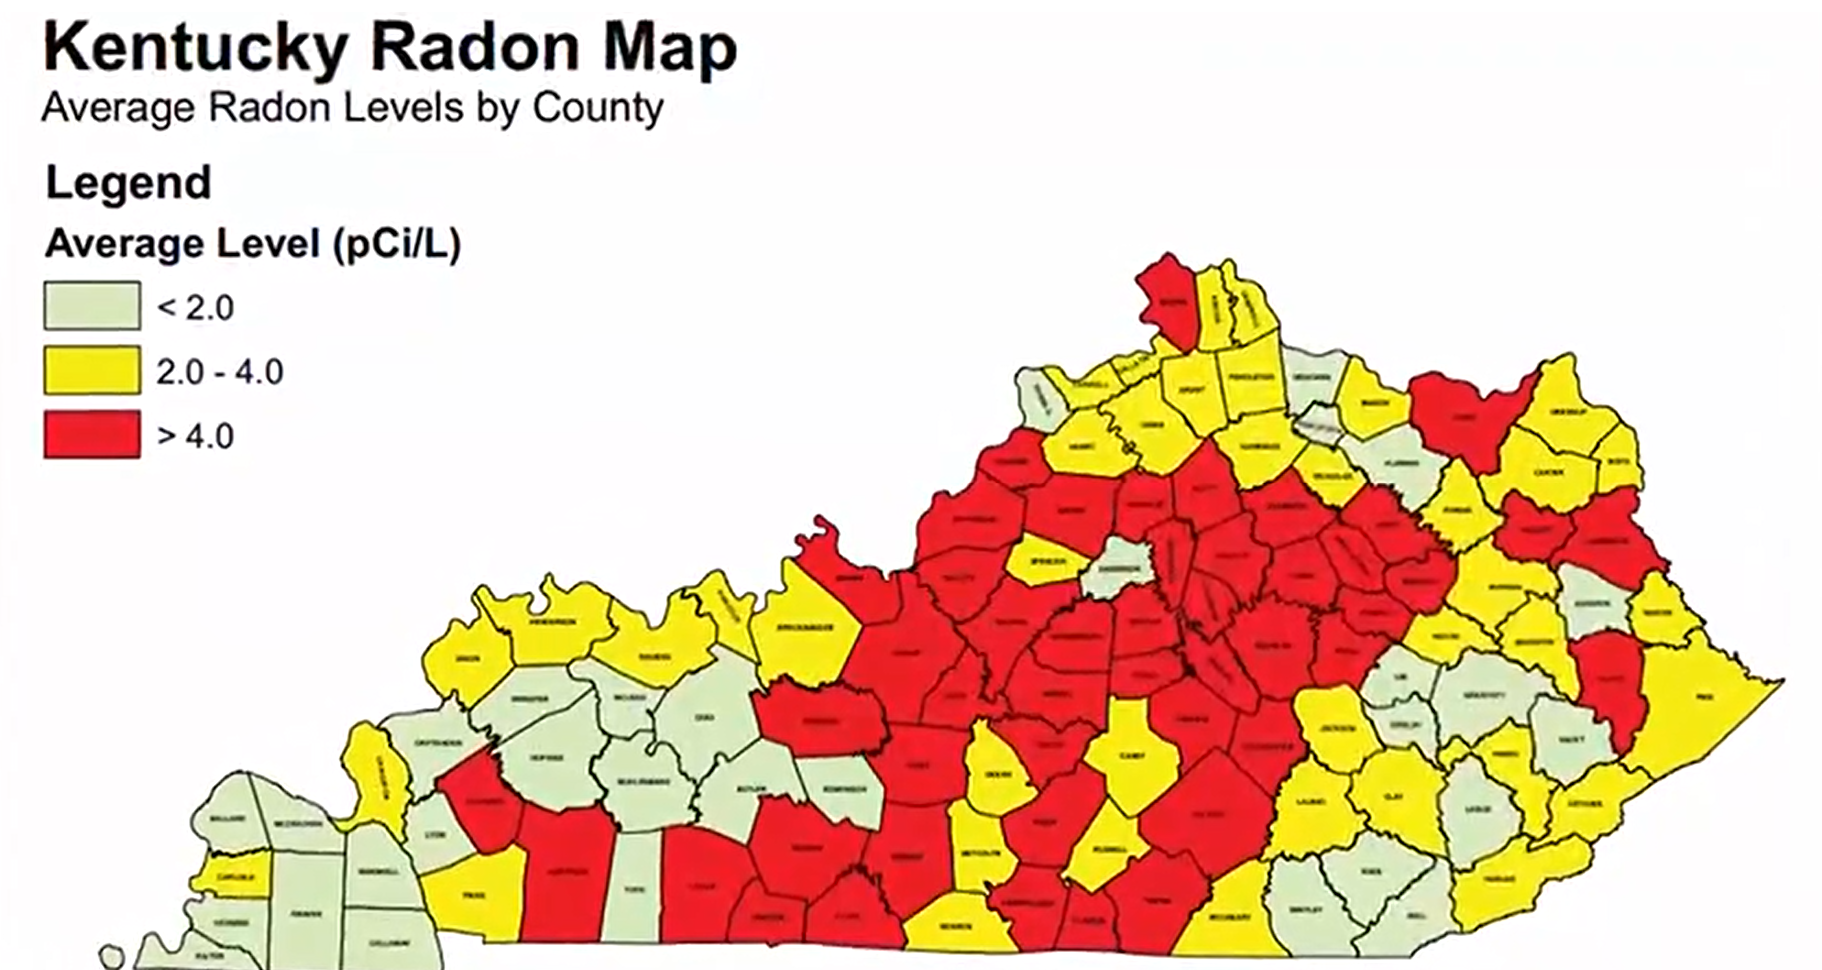 Kentucky Radon Map